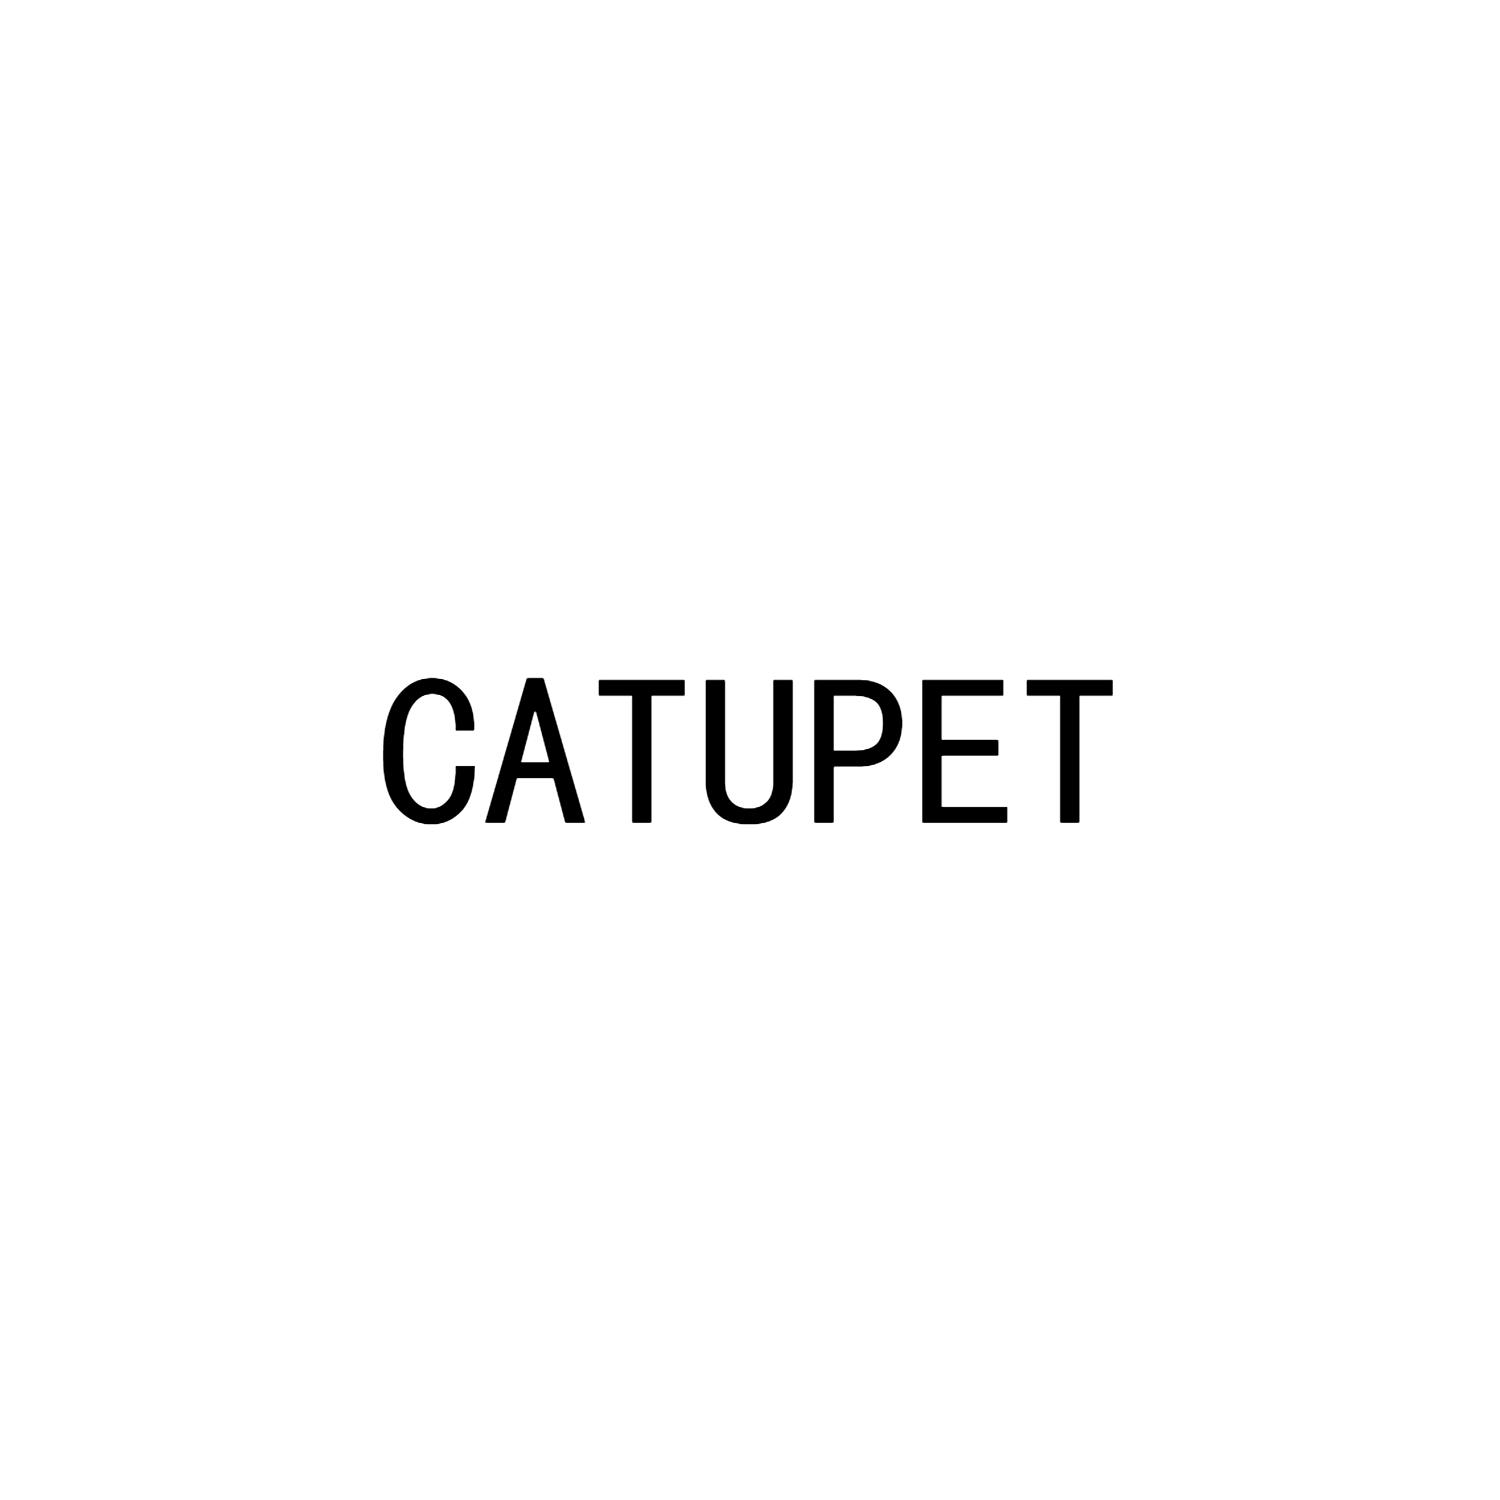 CATUPET商标转让